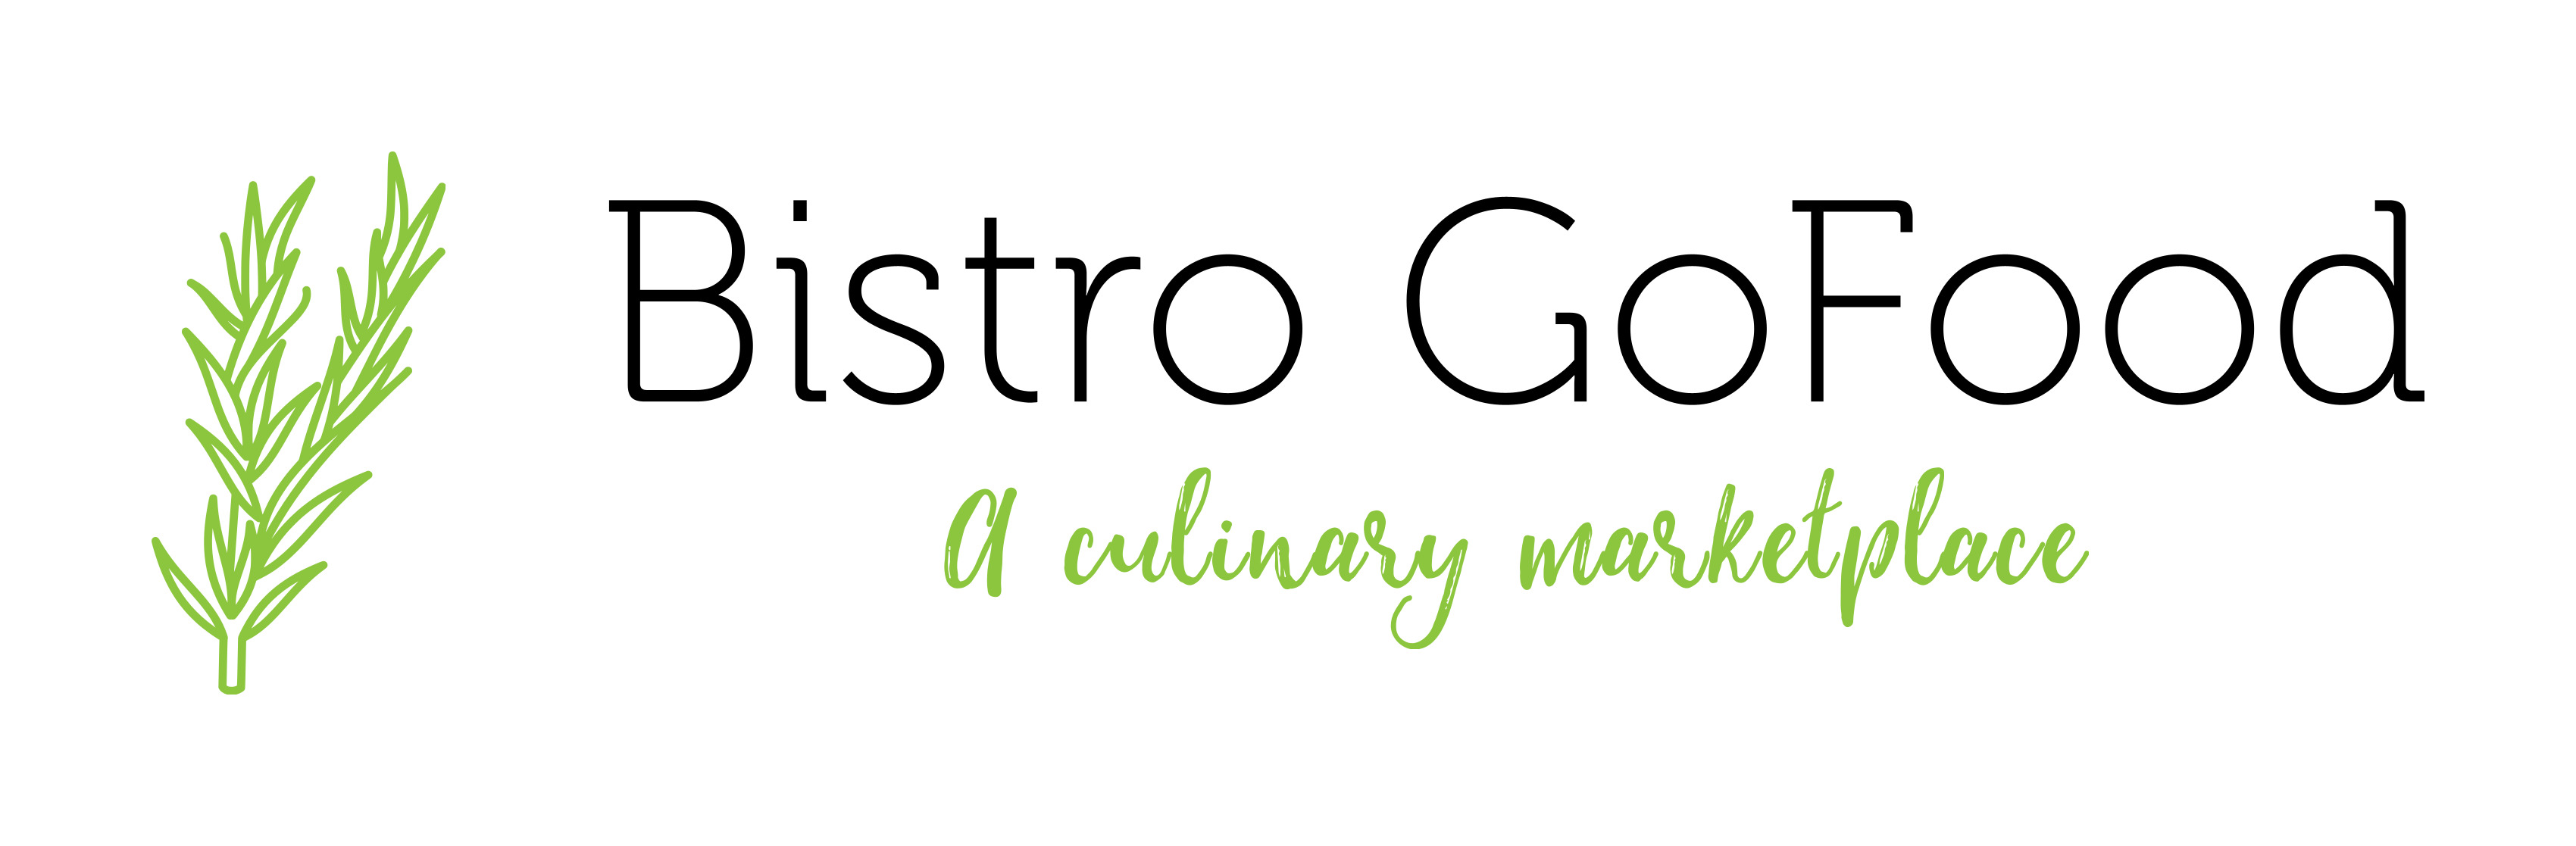 Logo Go Food – newstempo